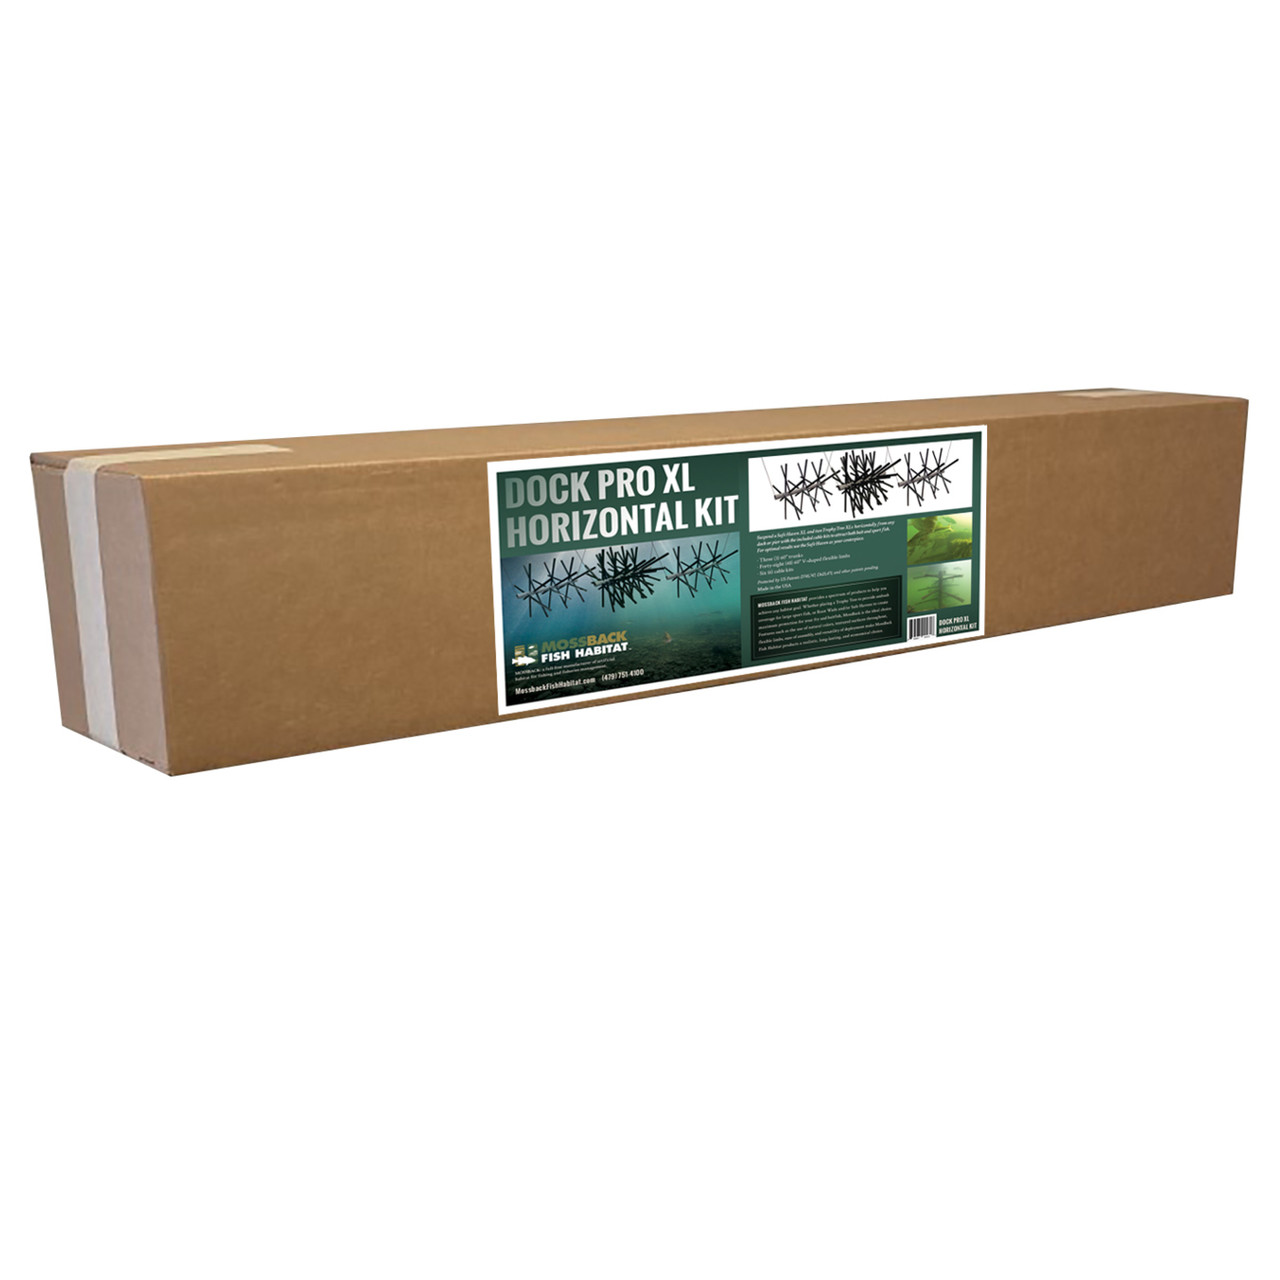 Dock Pro XL horizontal Kit in box